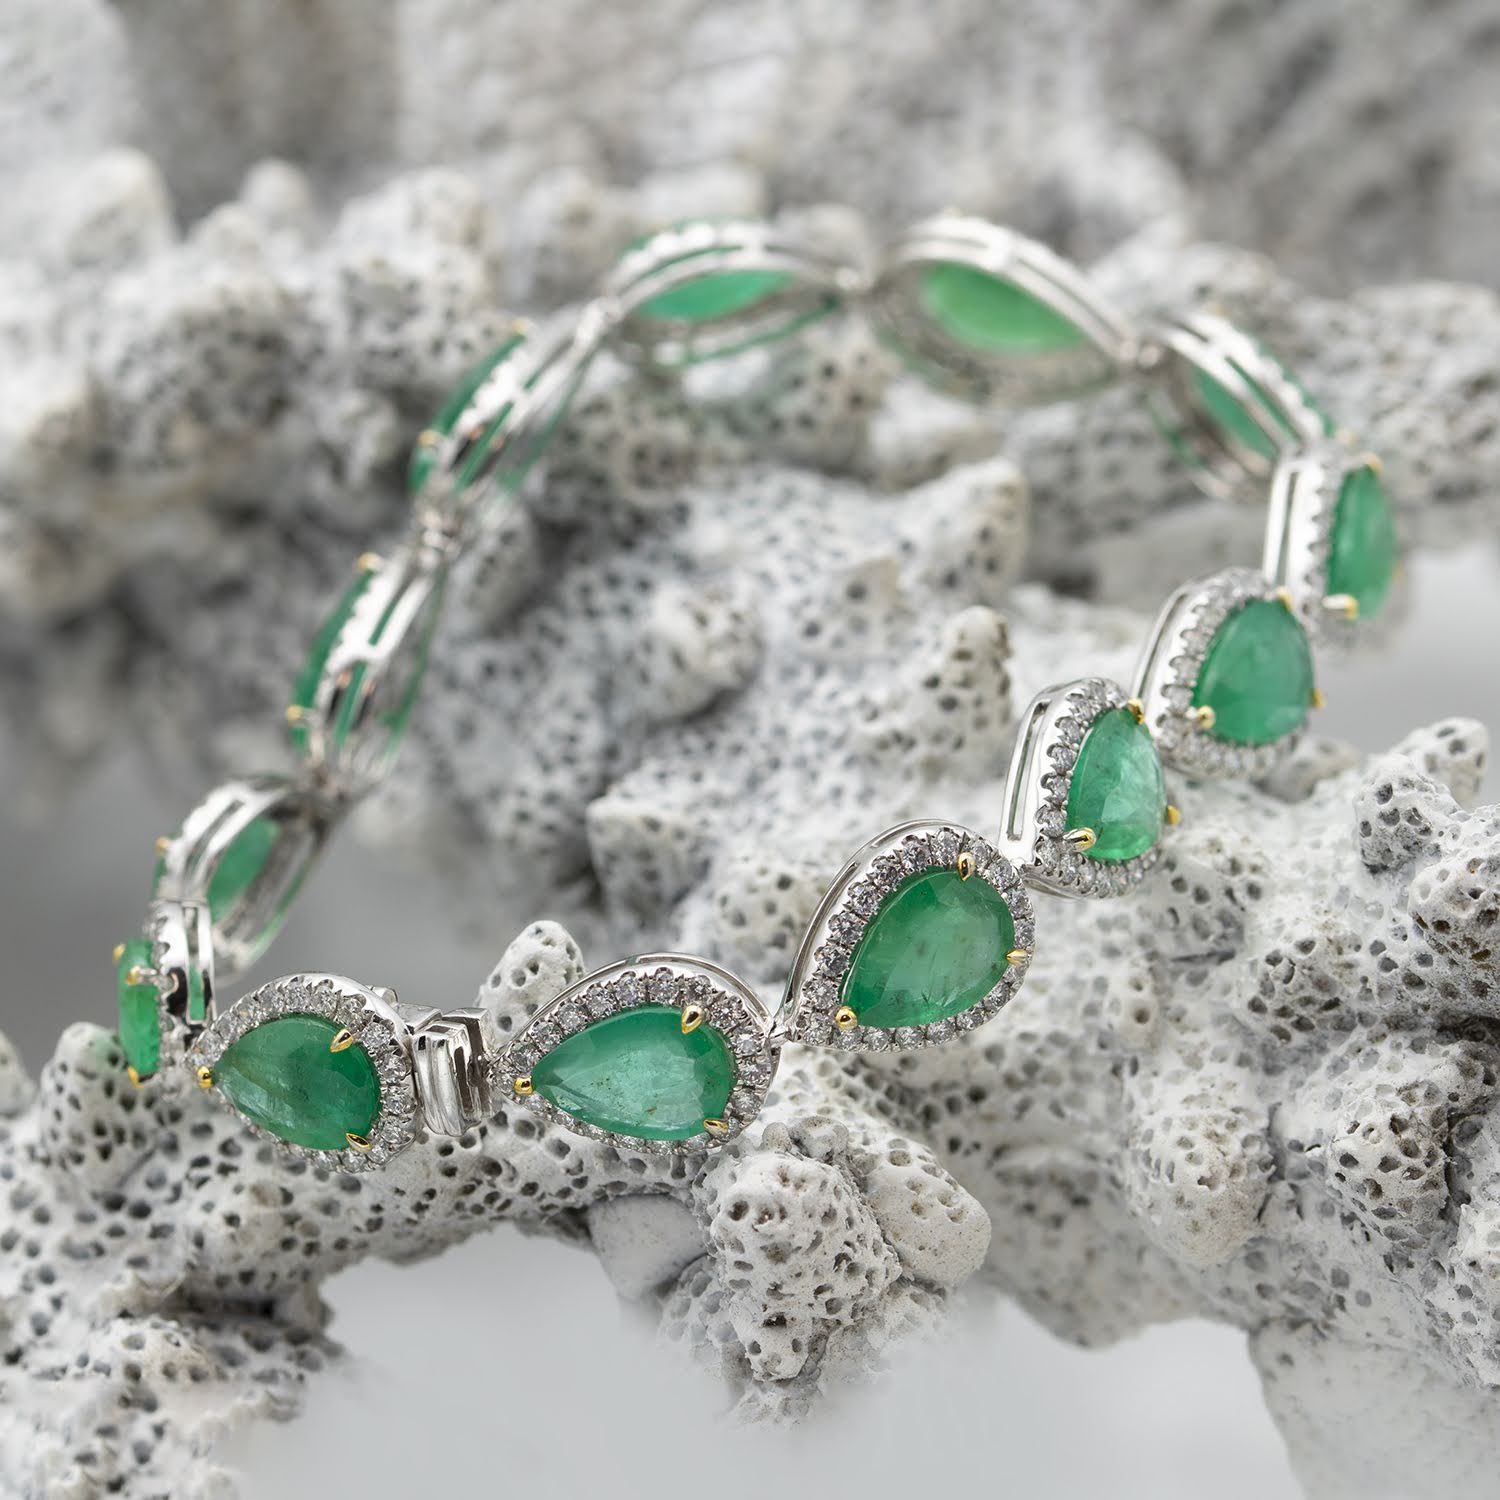 Pear Cut Emerald 18.55ct & Diamonds 2.96ct Bracelet – London Collection